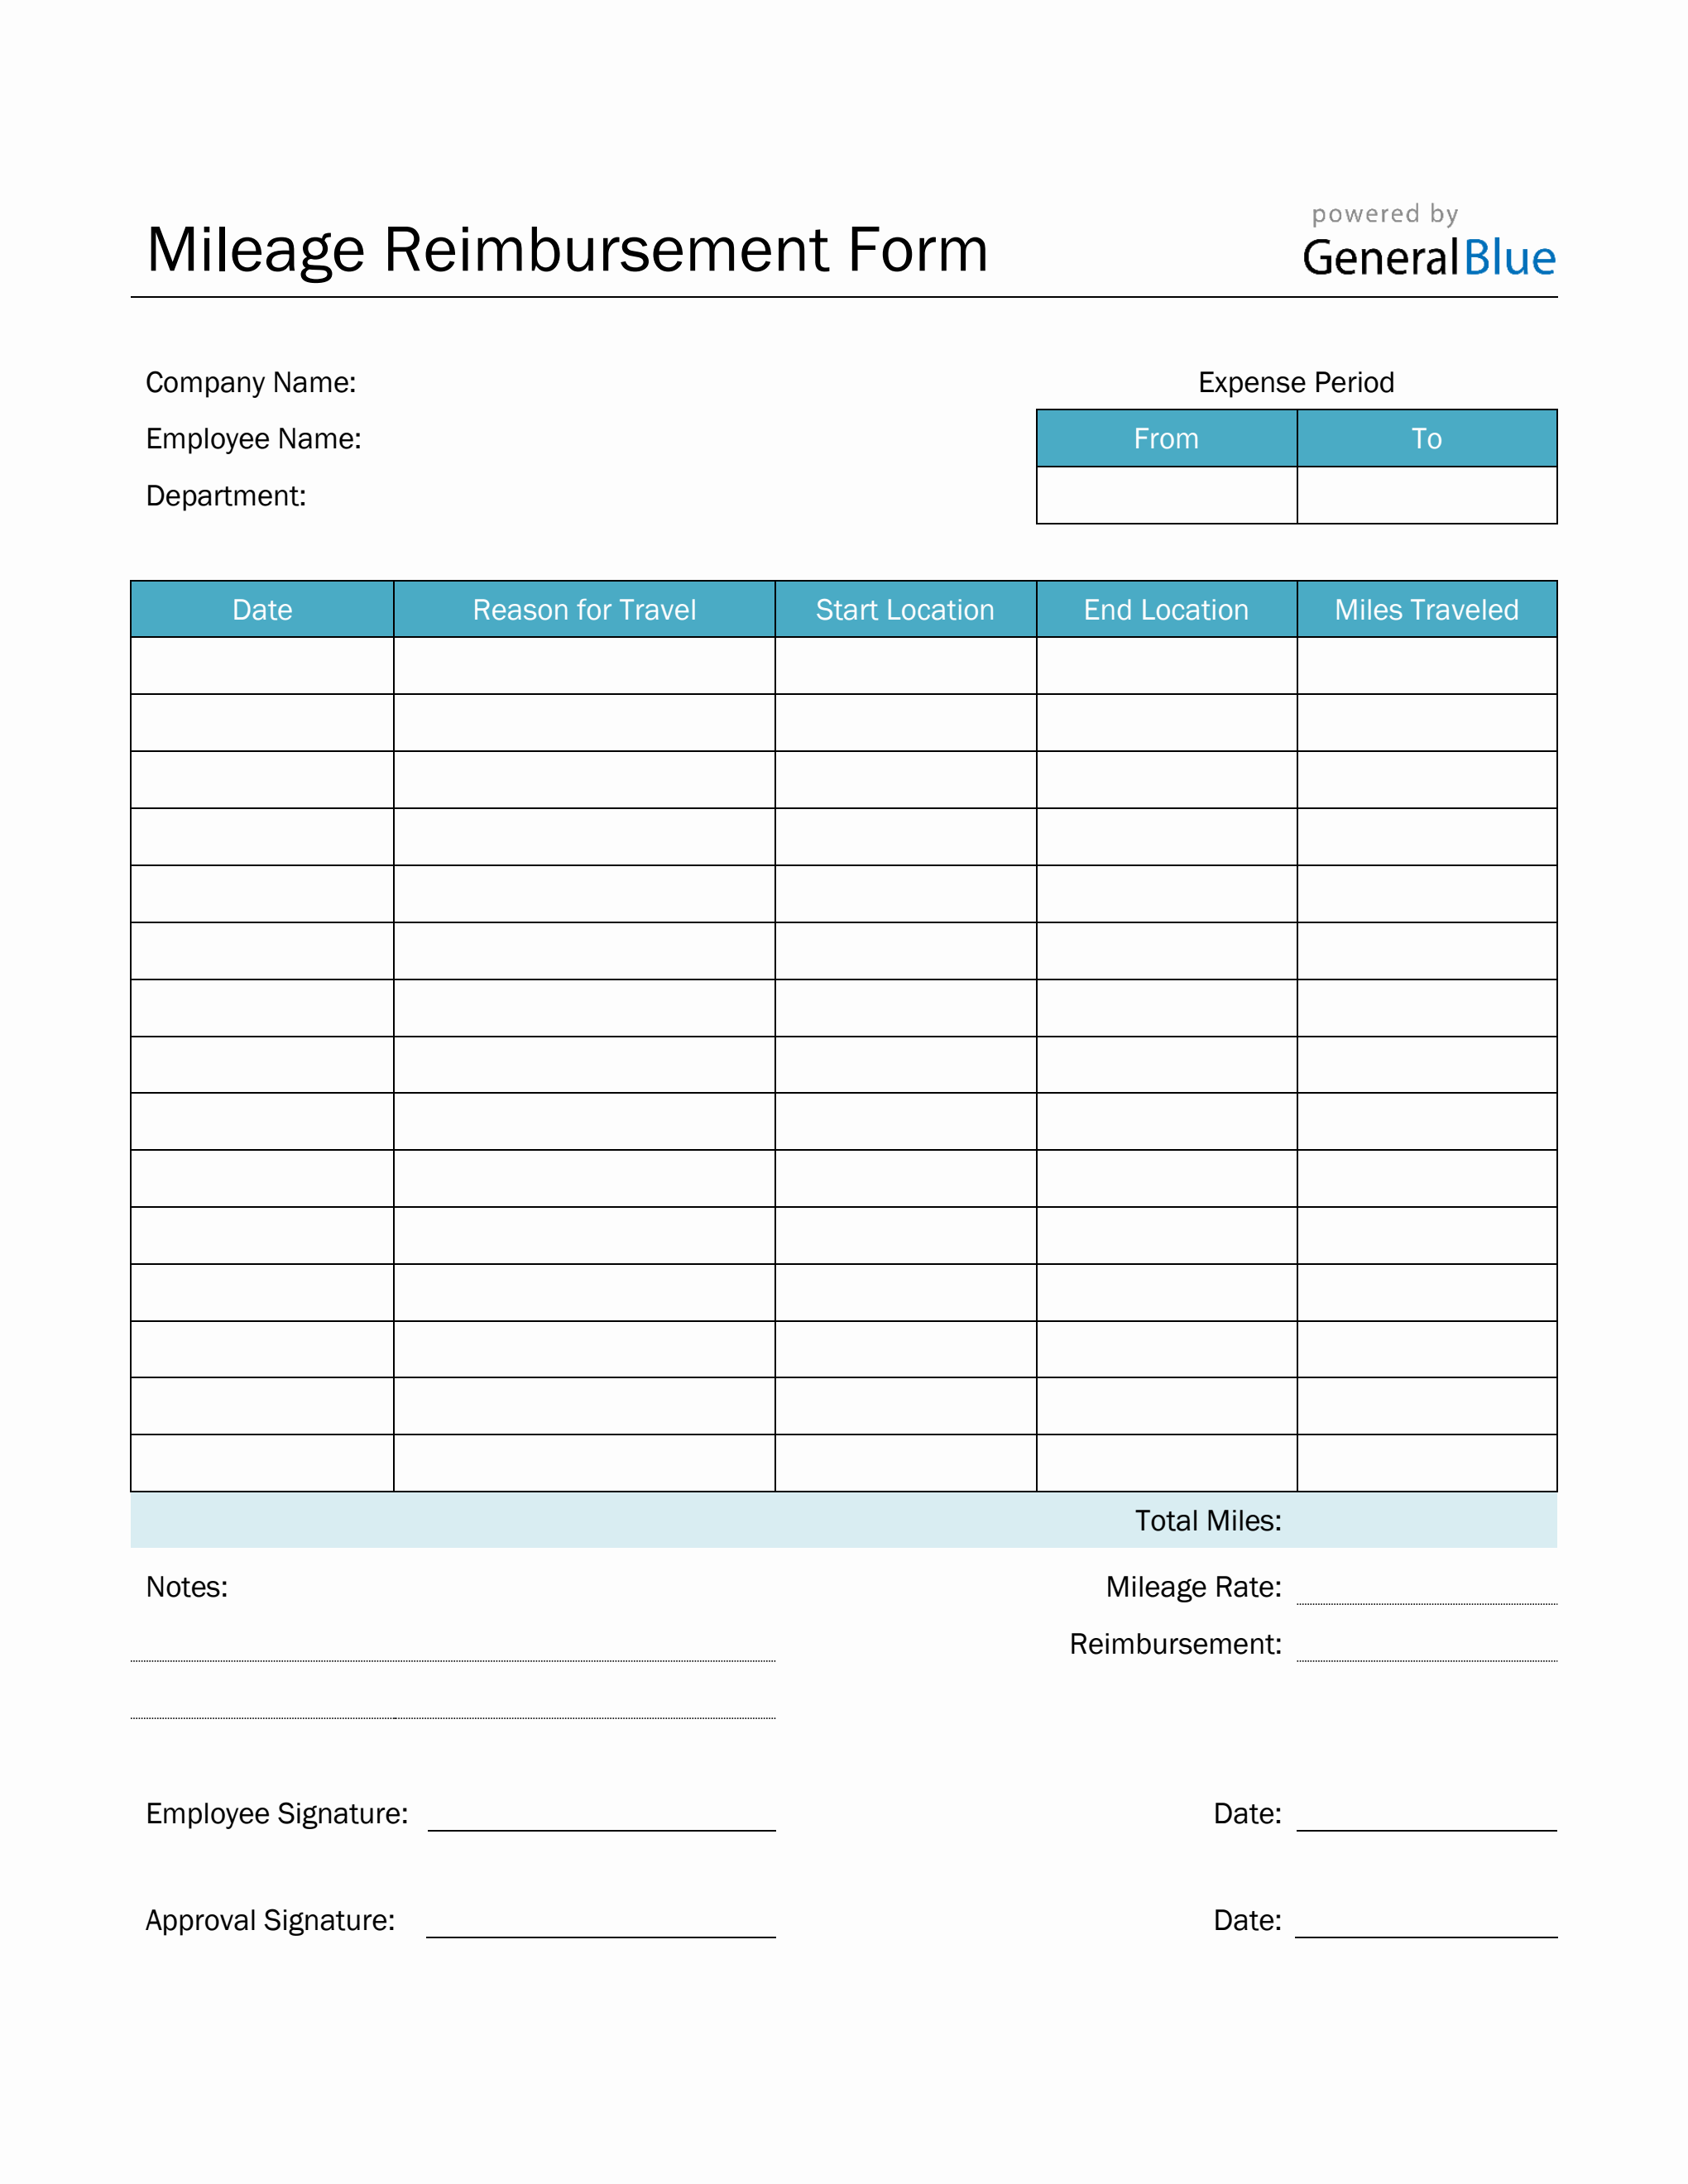 mileage-reimbursement-form-in-pdf-basic